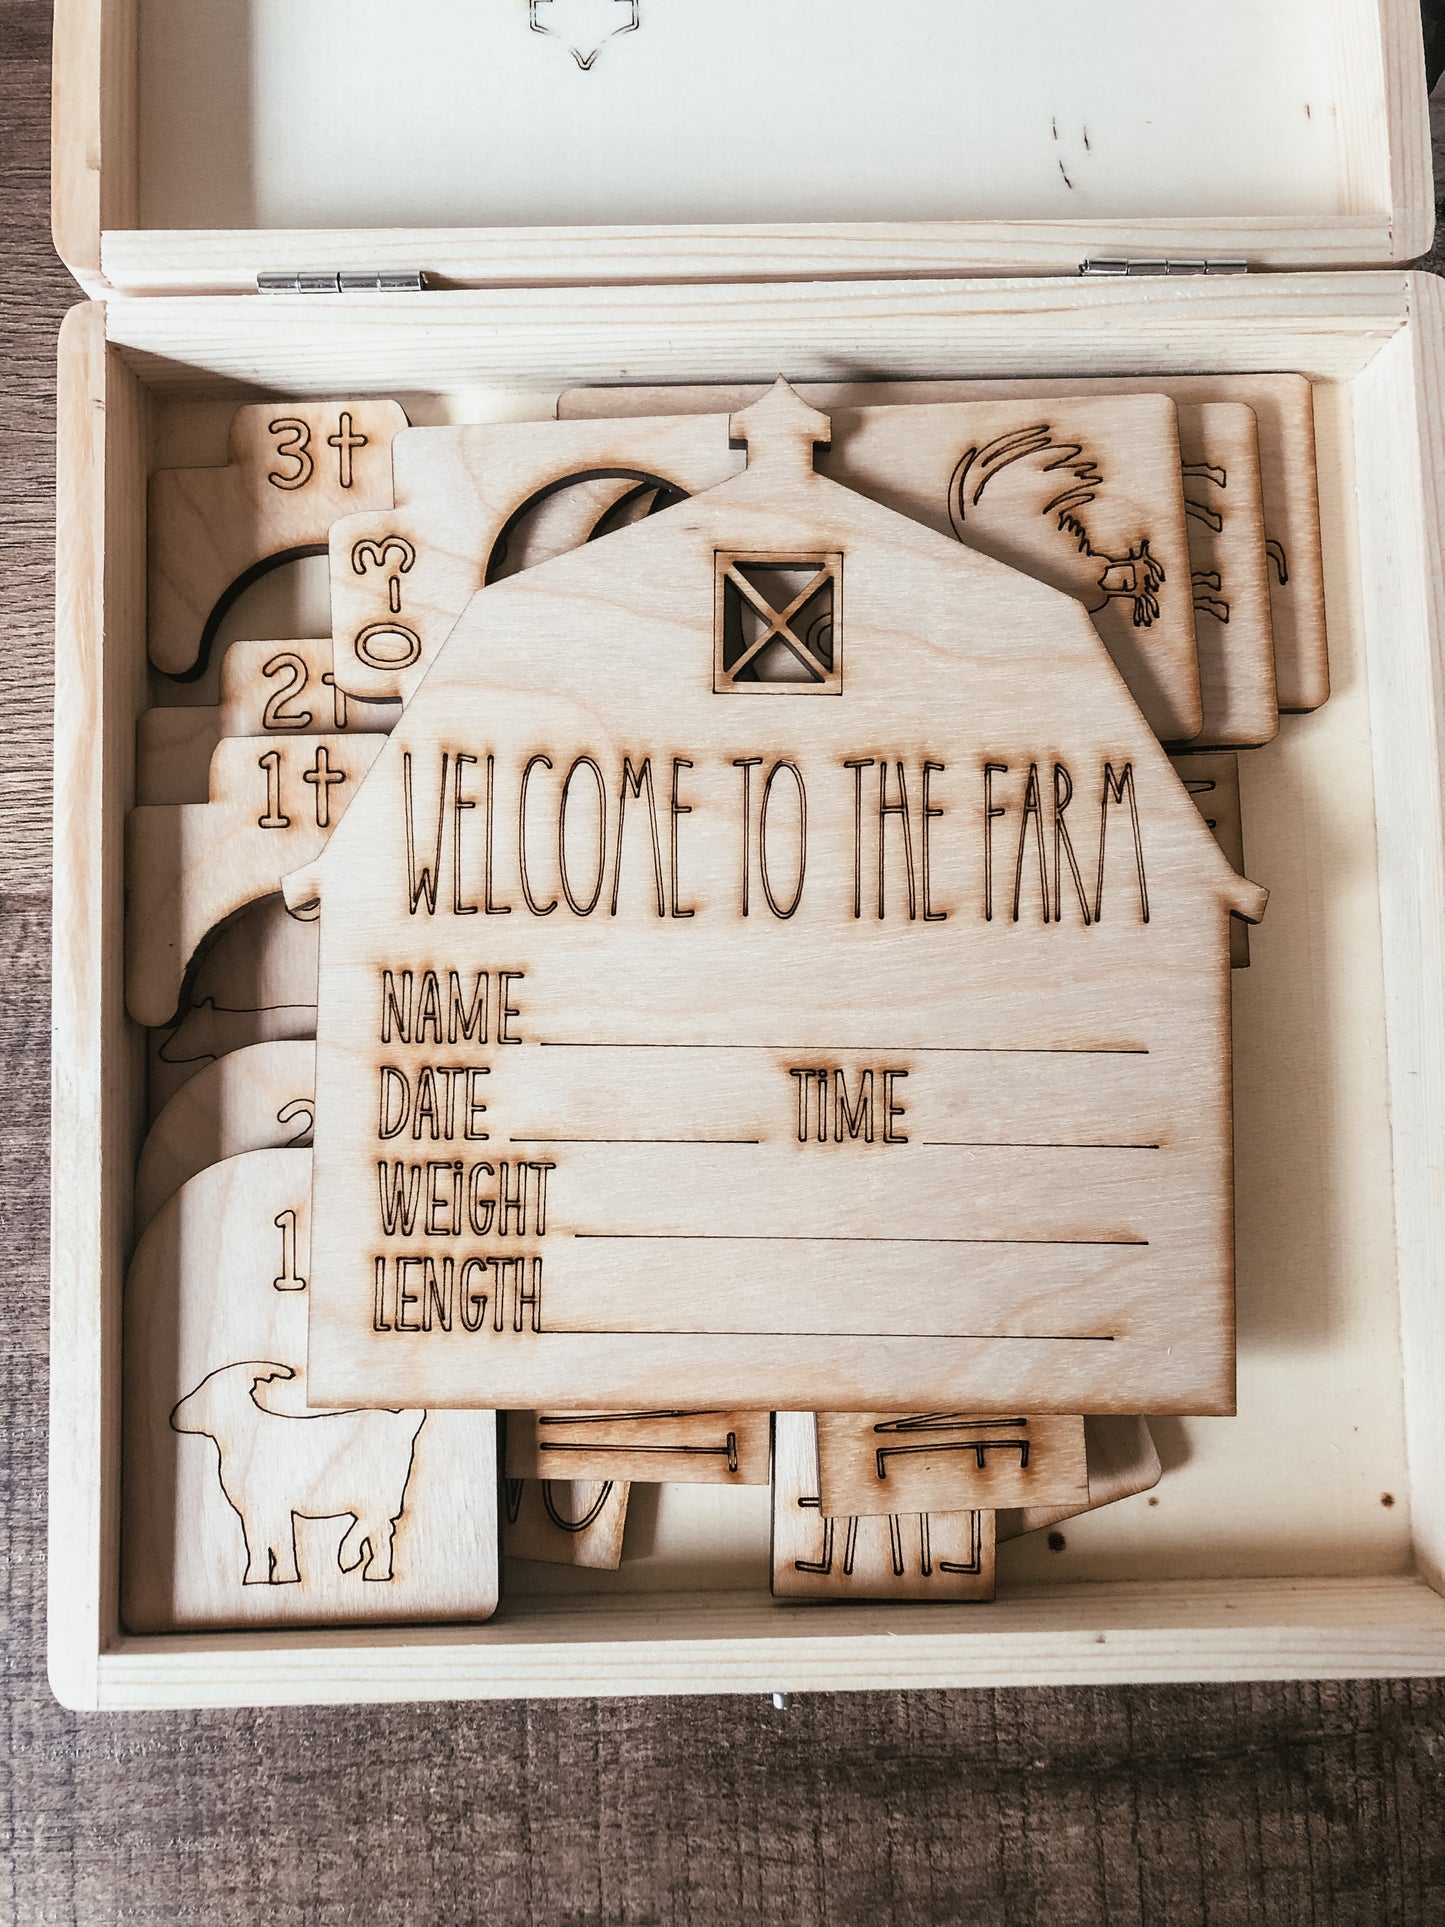 Future Farmer Milestone Gift Box Set (22 Piece Set)